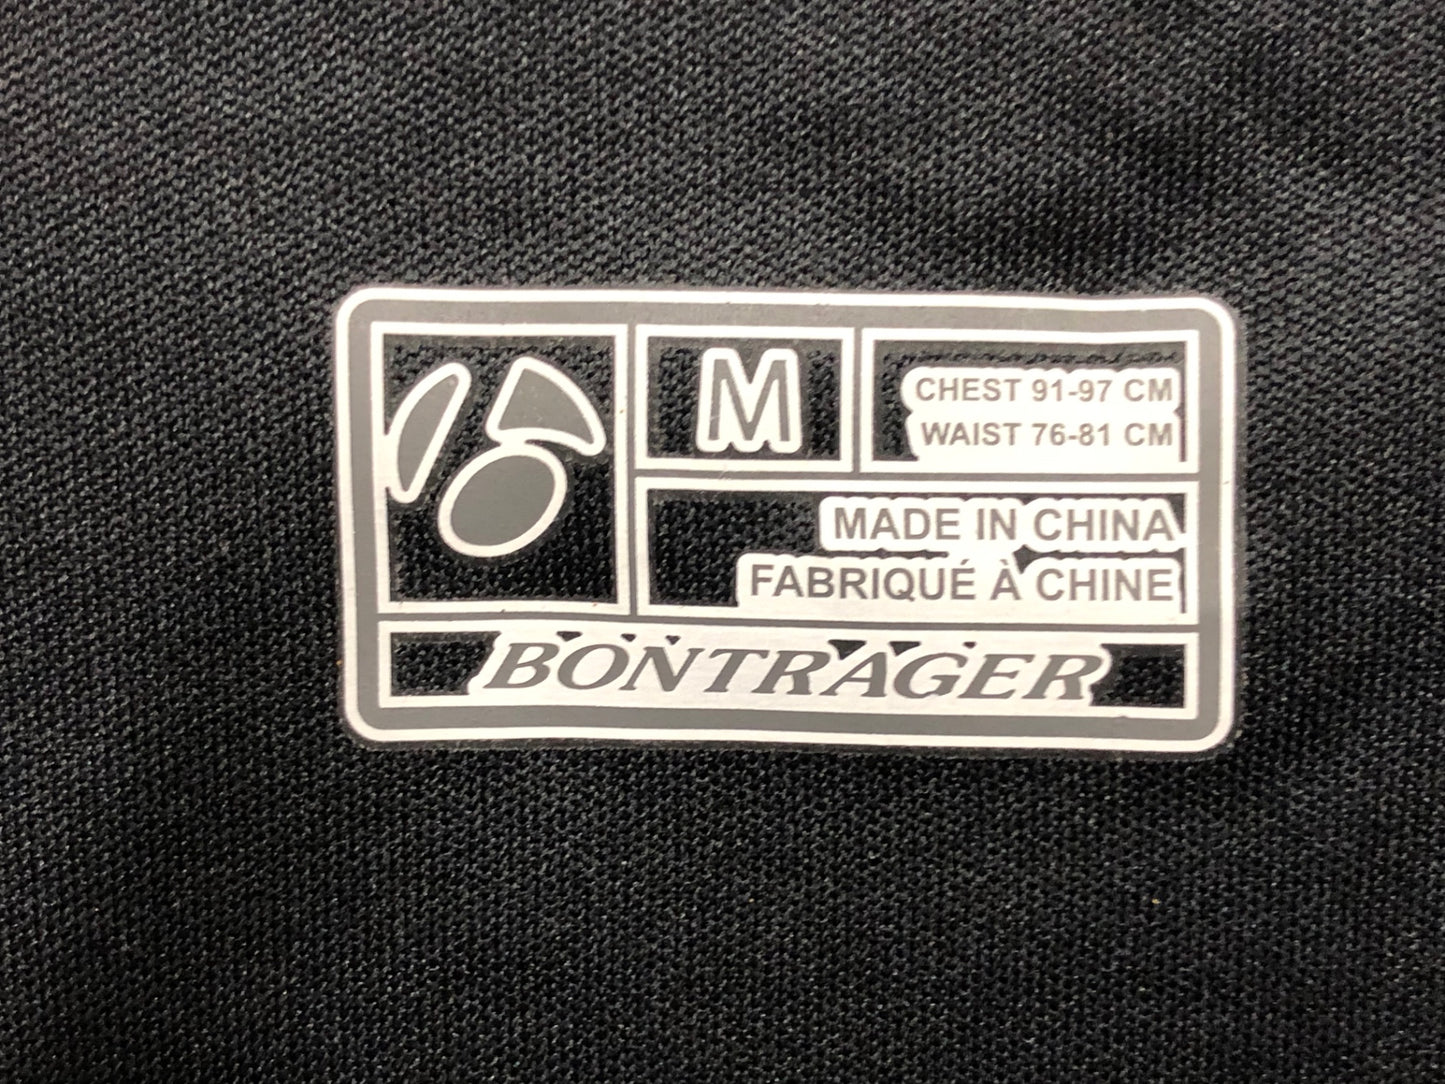 HU941 ボントレガー BONTRAGER 半袖 サイクルジャージ 黒白 M